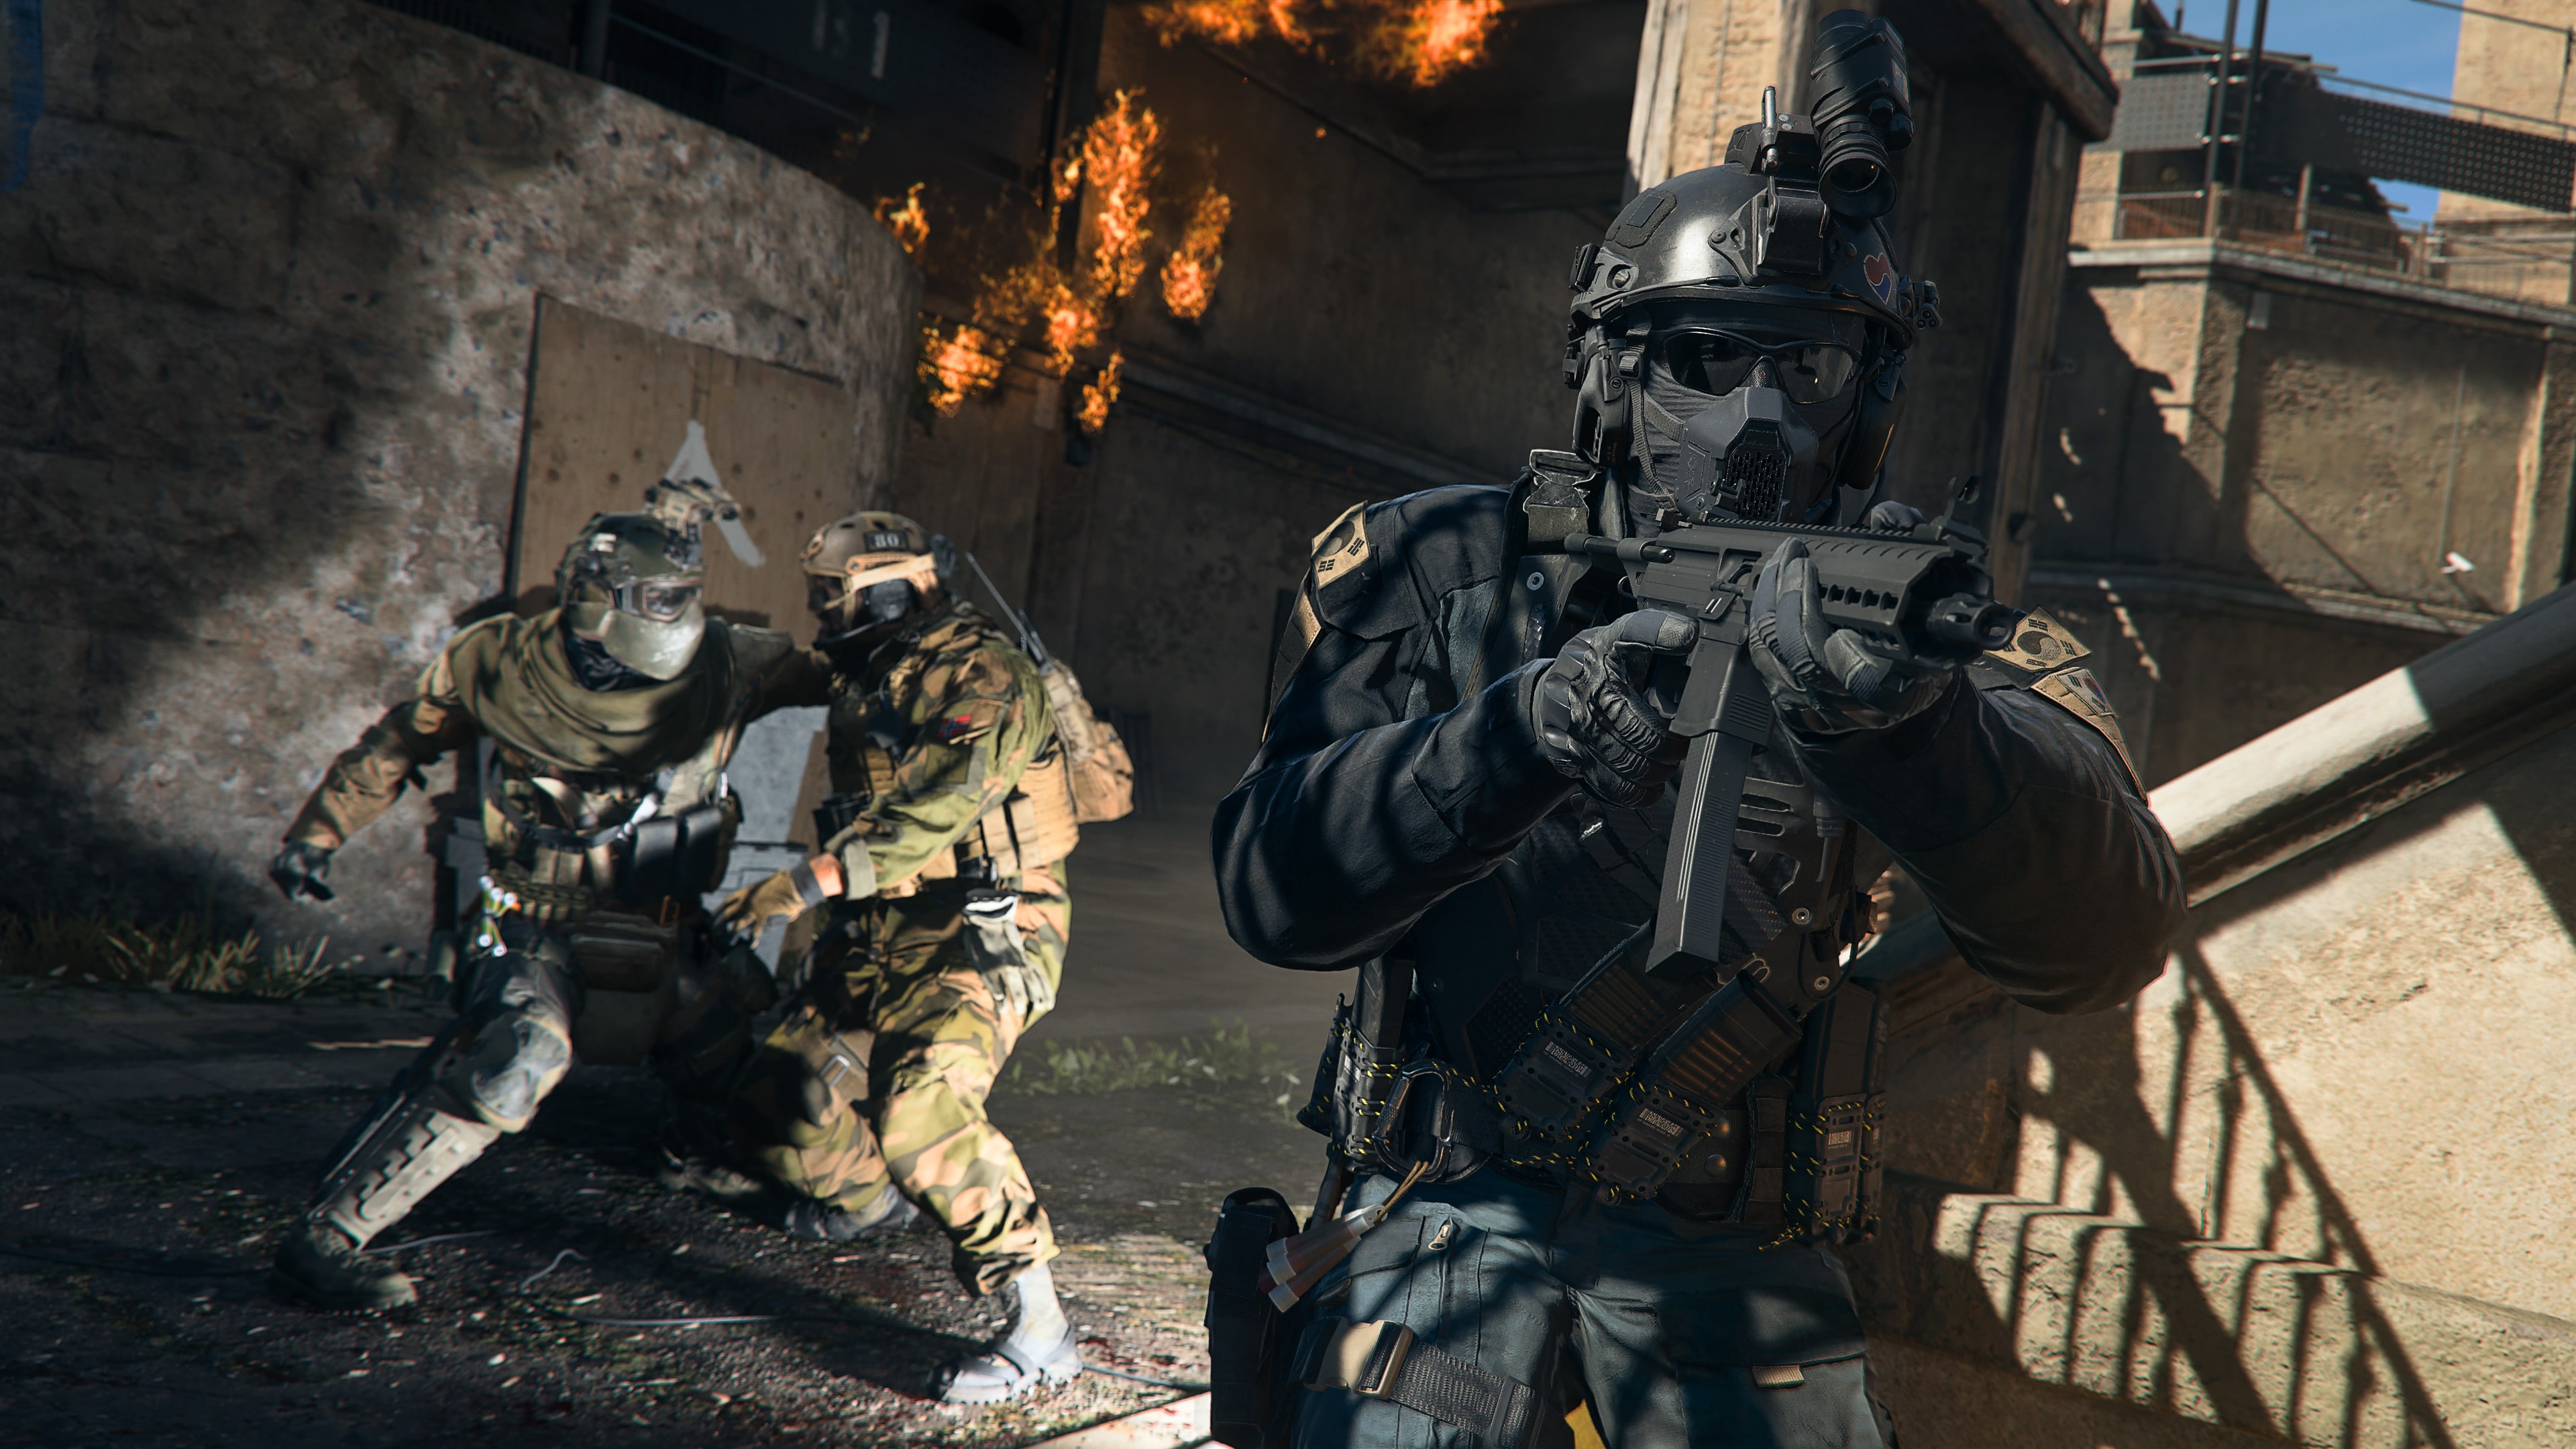 Call Of Duty: Modern Warfare II — Cross-Gen Bundle on PS5 PS4 — price  history, screenshots, discounts • USA